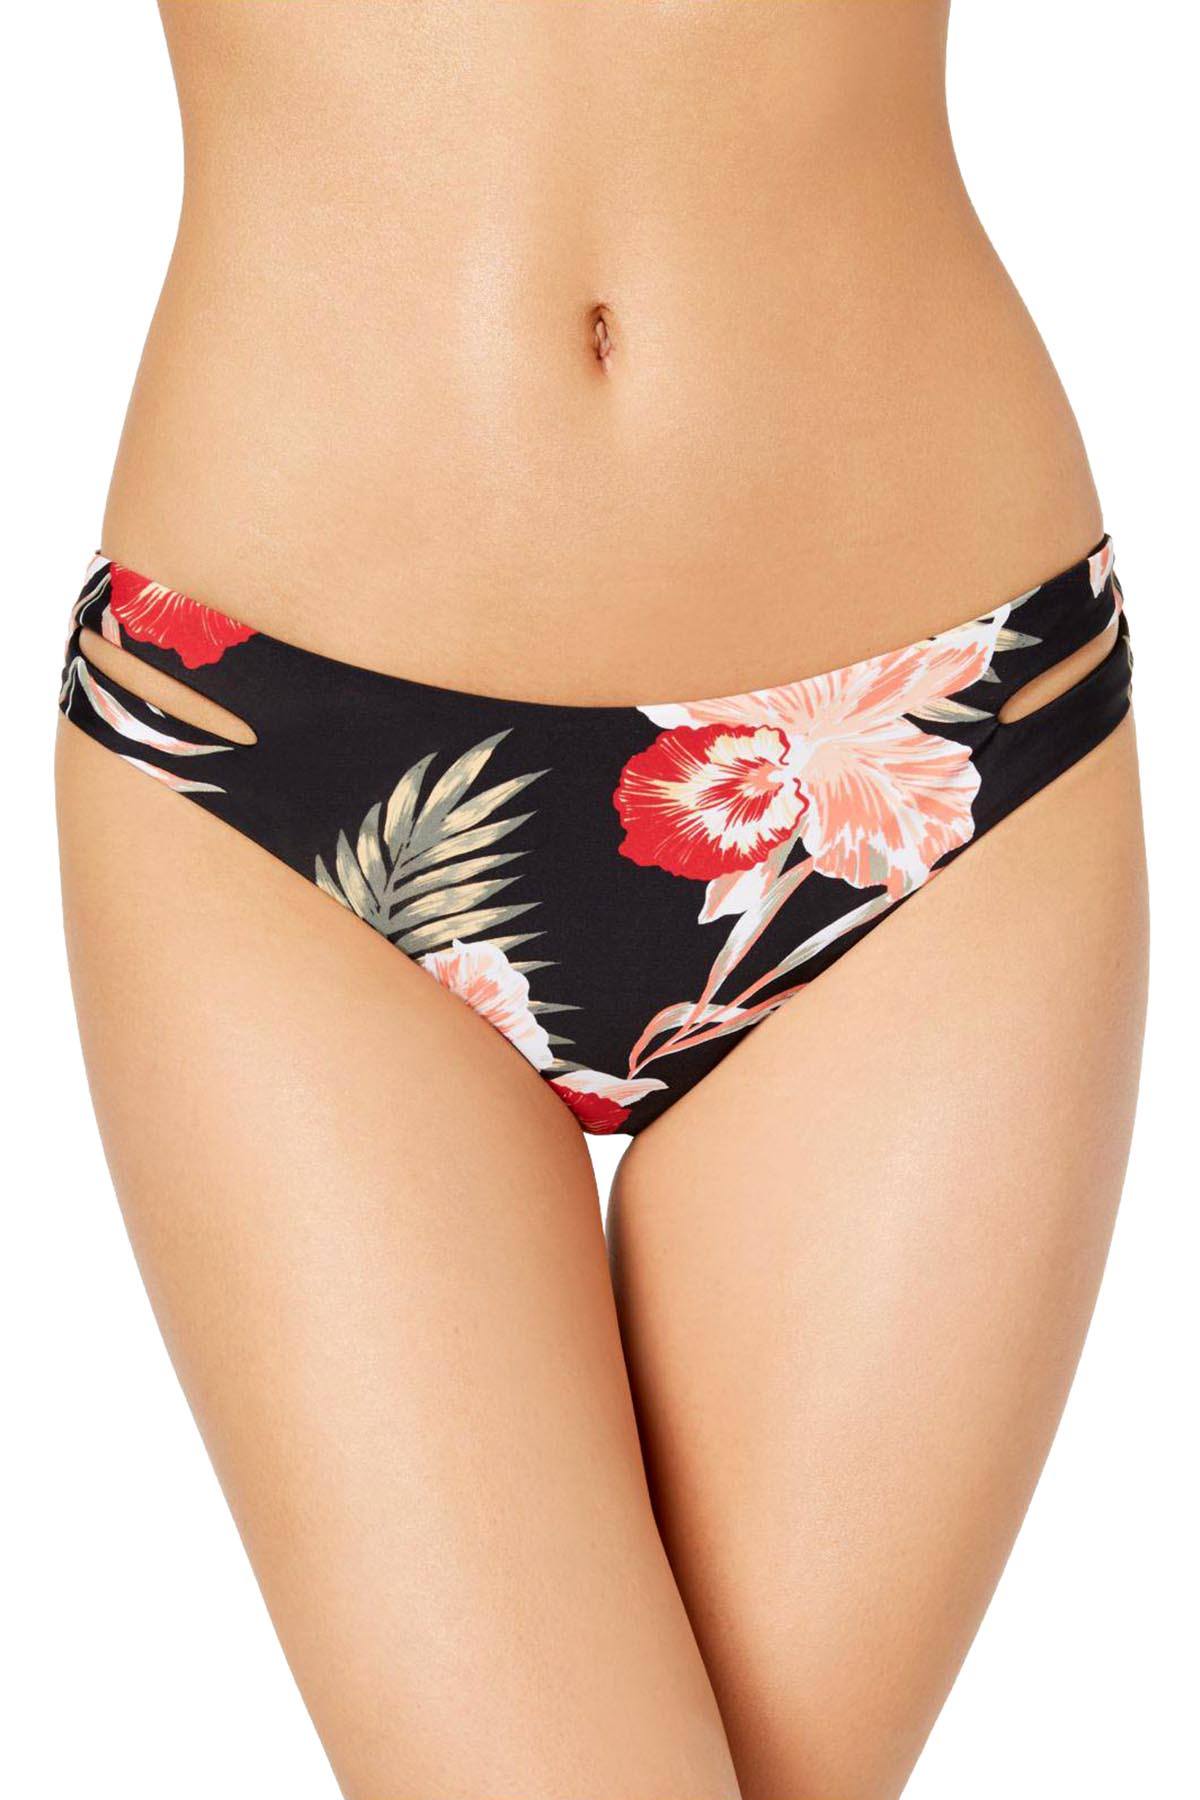 Roxy Sea Lovers Cutout Cheeky Bikini Bottom in Anthracite Black